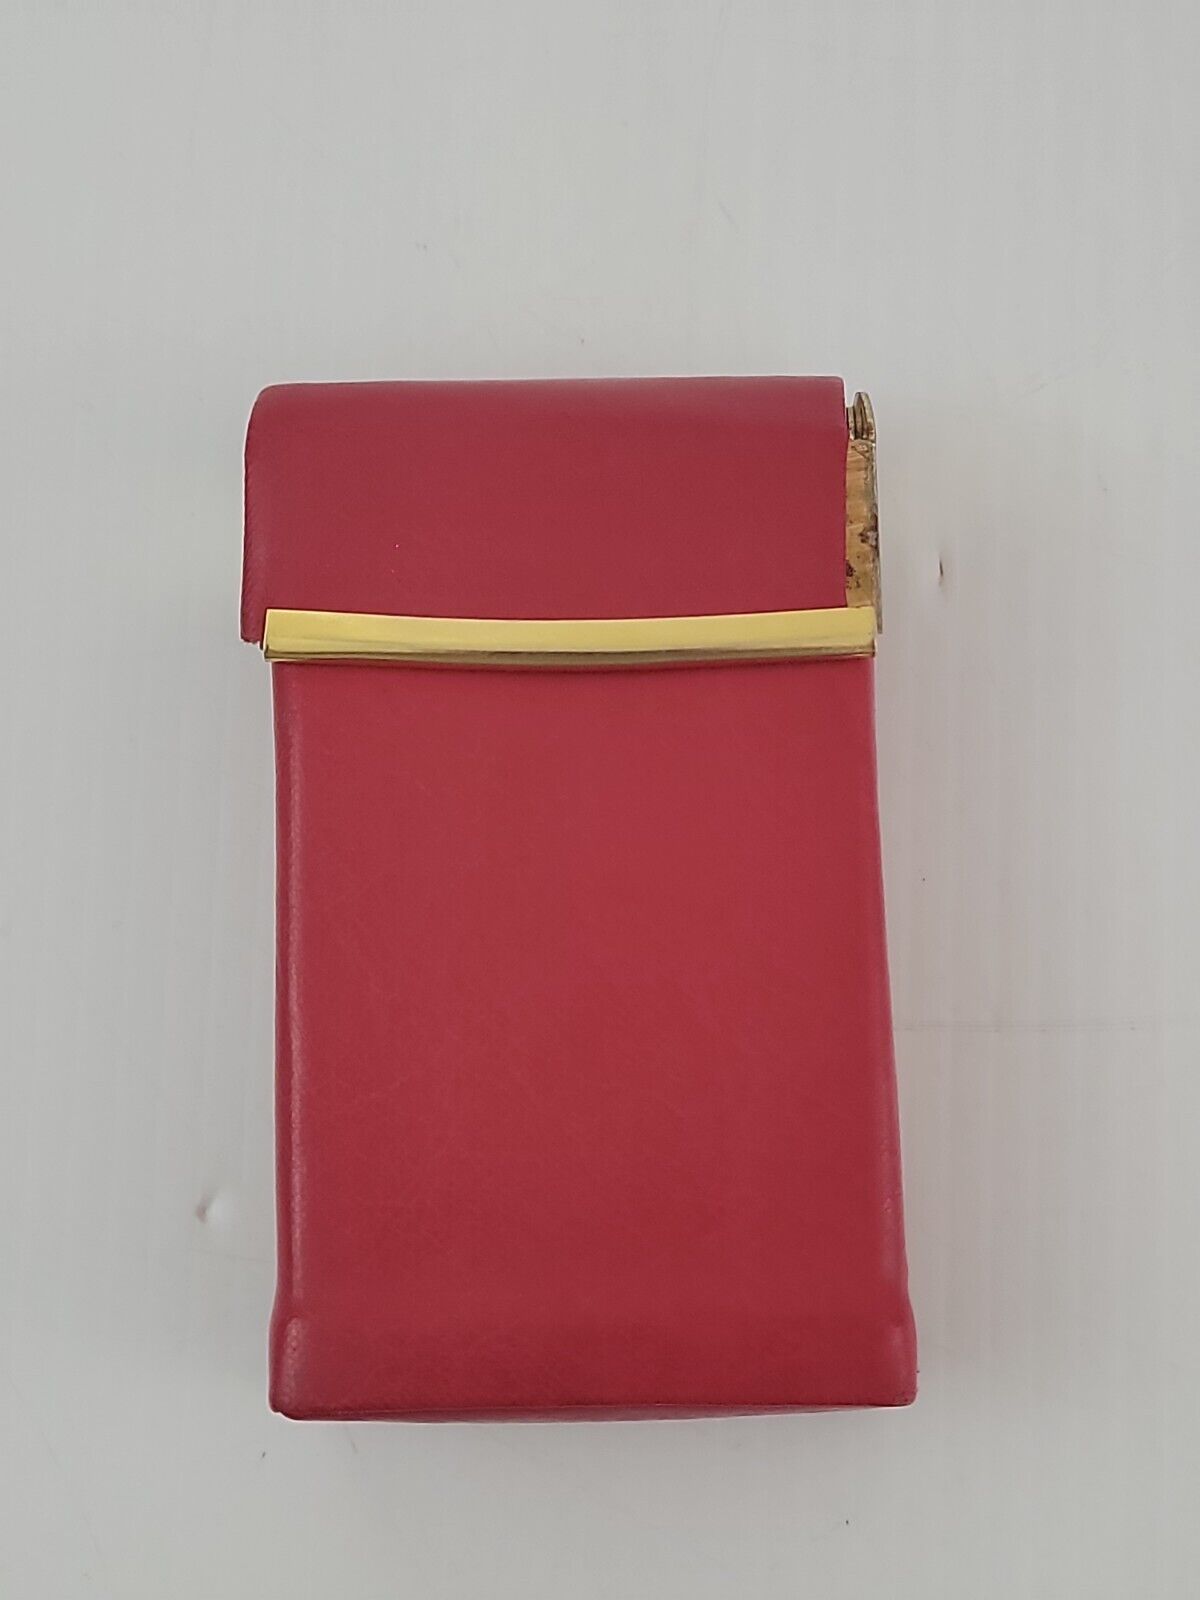 Vintage Red Leather Cigarette Case Brass Hinged Flip Cover Standard Pack Size